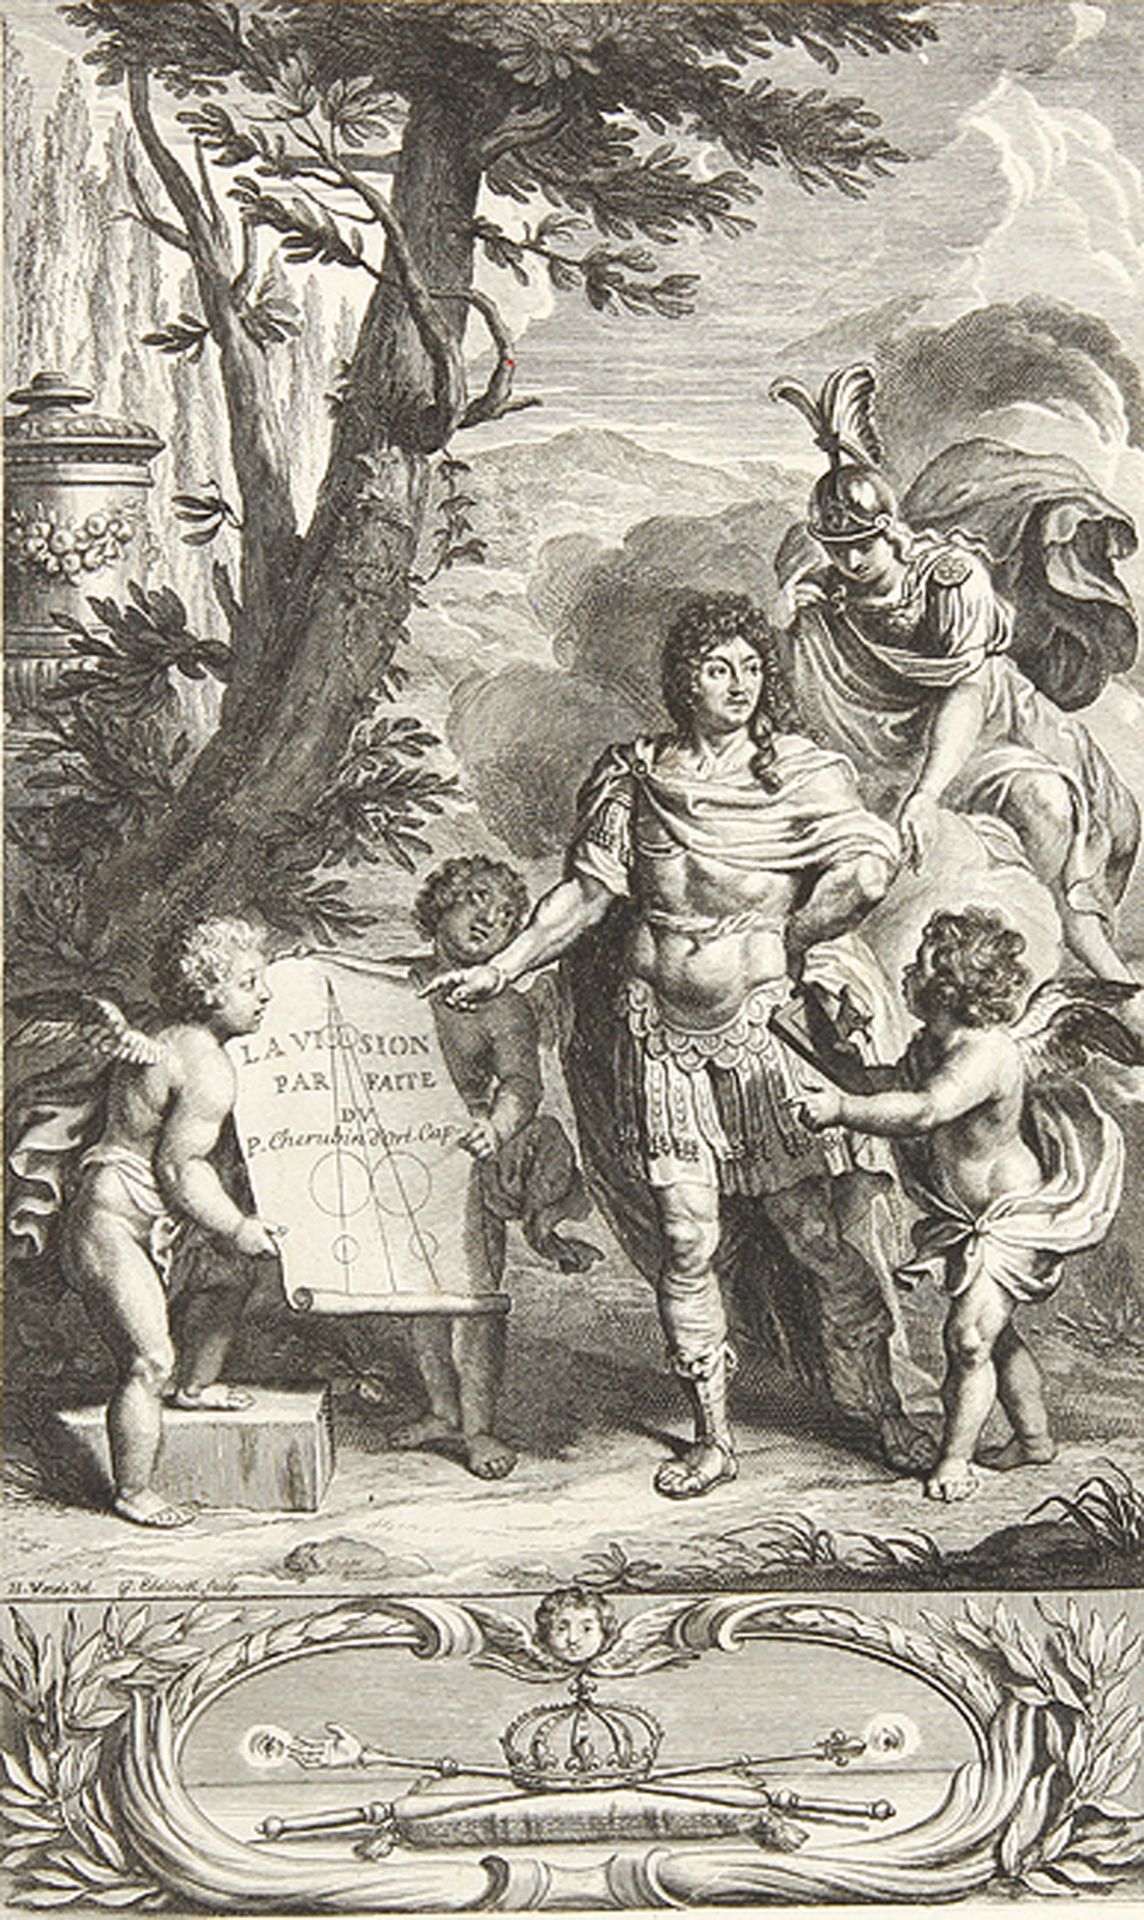 VARIA - KUNST UND KULTUR: Louis XIV., Roi de France (Frontispiz zu P. Cherubin, „La Vision parfaite